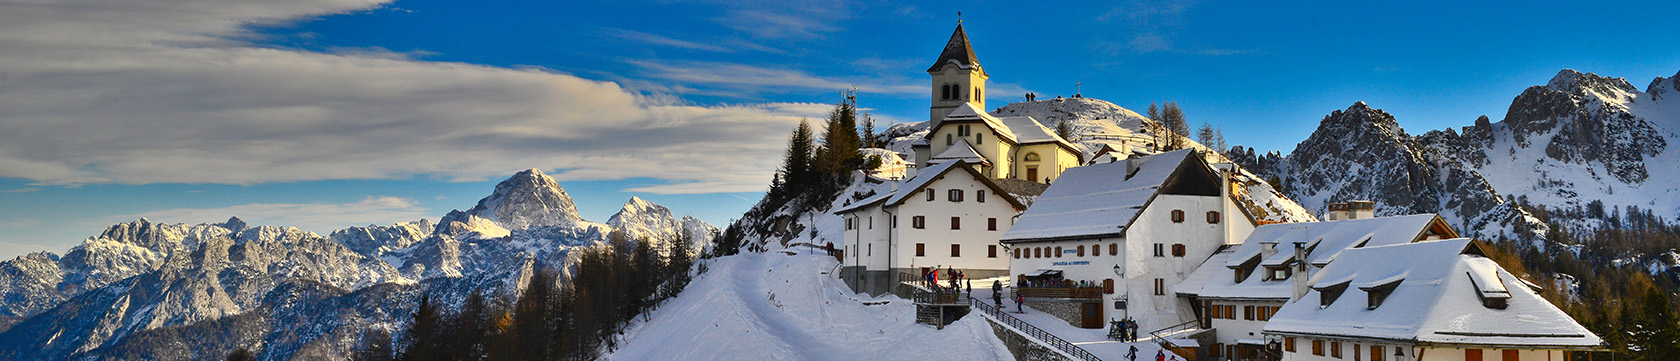 wintersport-italië-activiteiten-eten-slee-piste-skiën-snowboarden